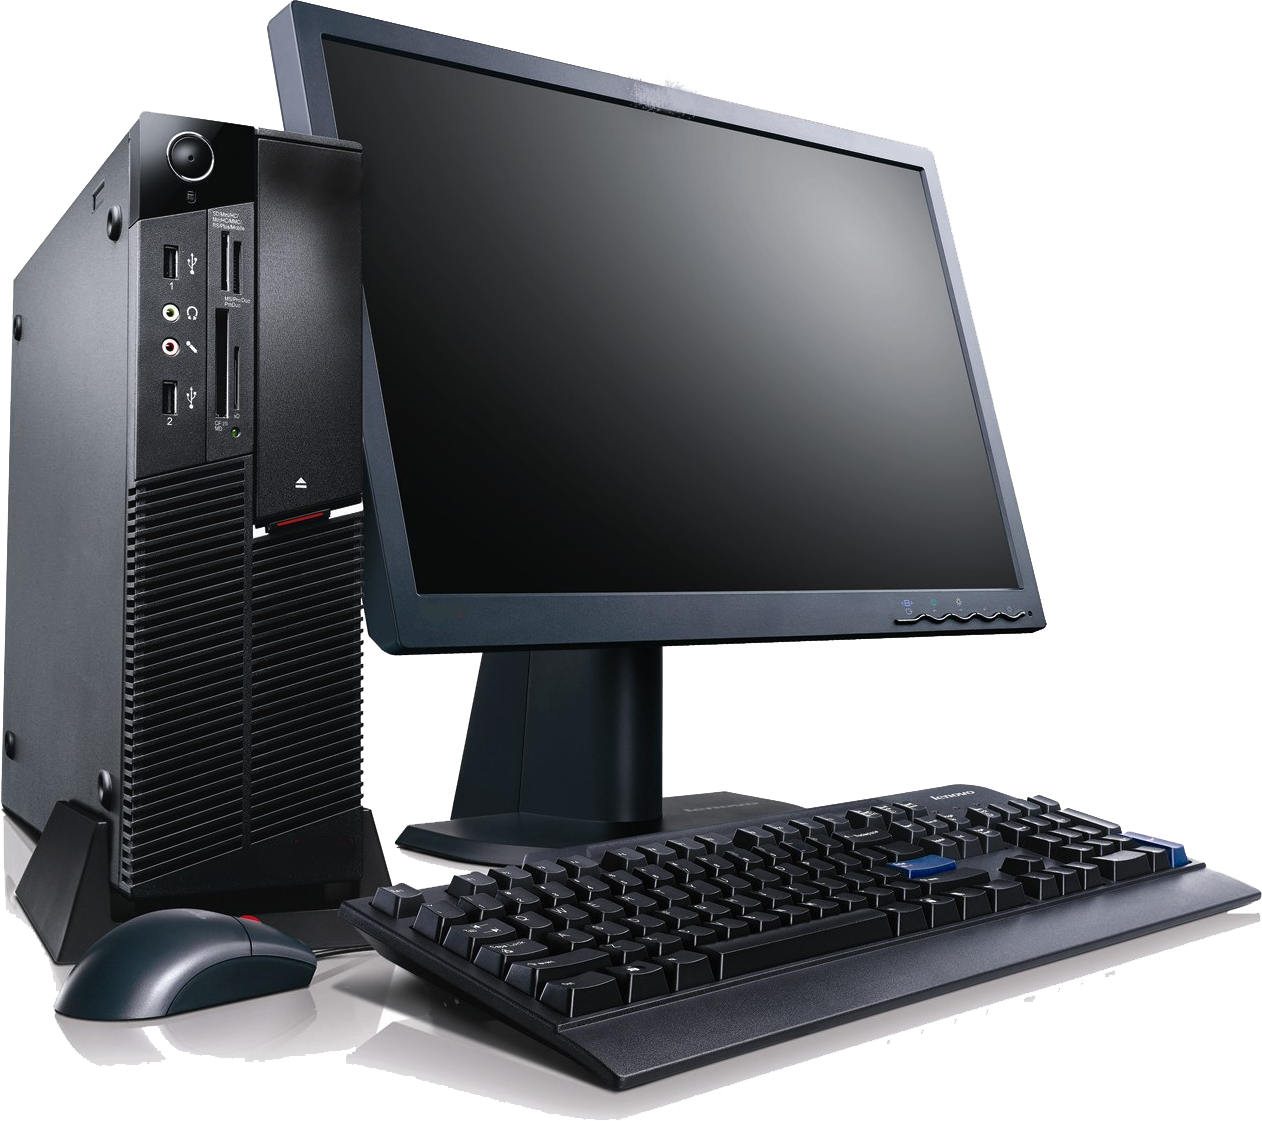 Komputer desktop komputer